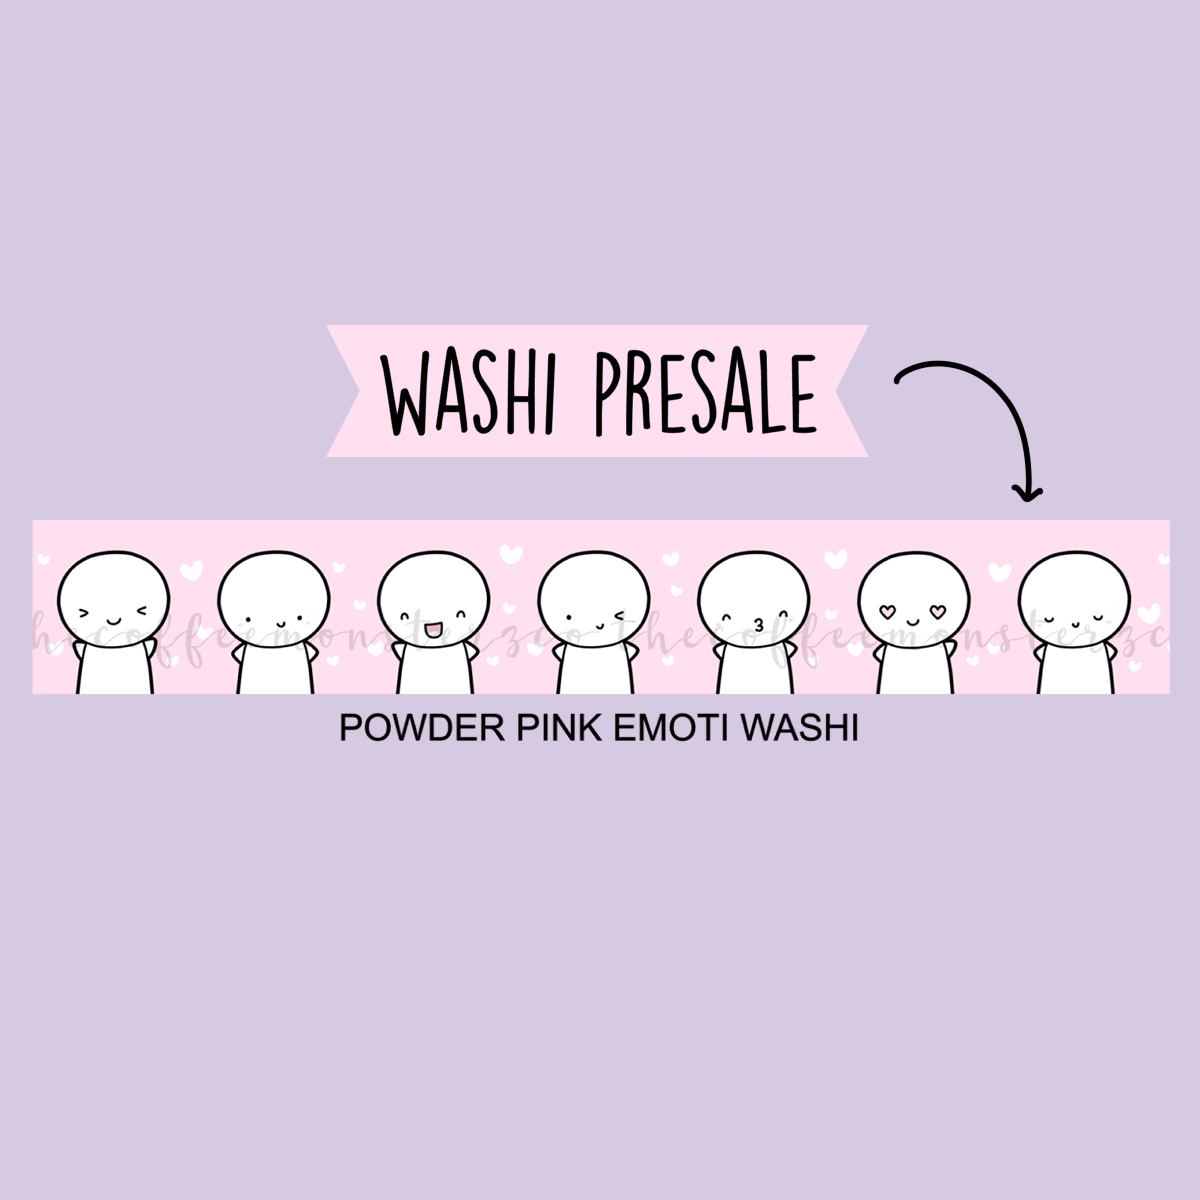 Powder Pink Emoti Washi (Limit 2 rolls per person), TheCoffeeMonsterzCo